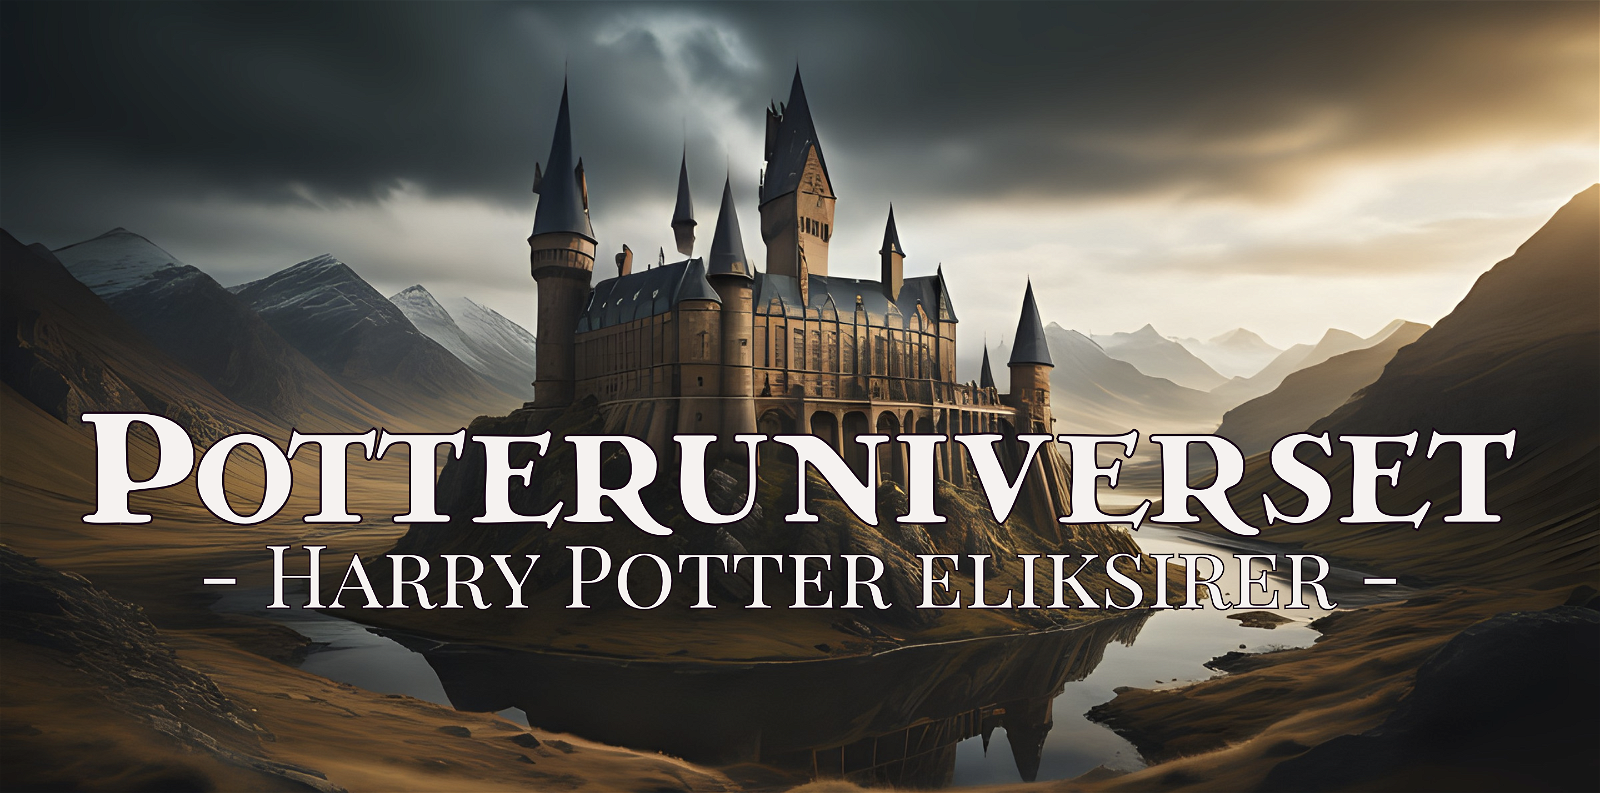 Potteruniverset: Harry Potter eliksirer